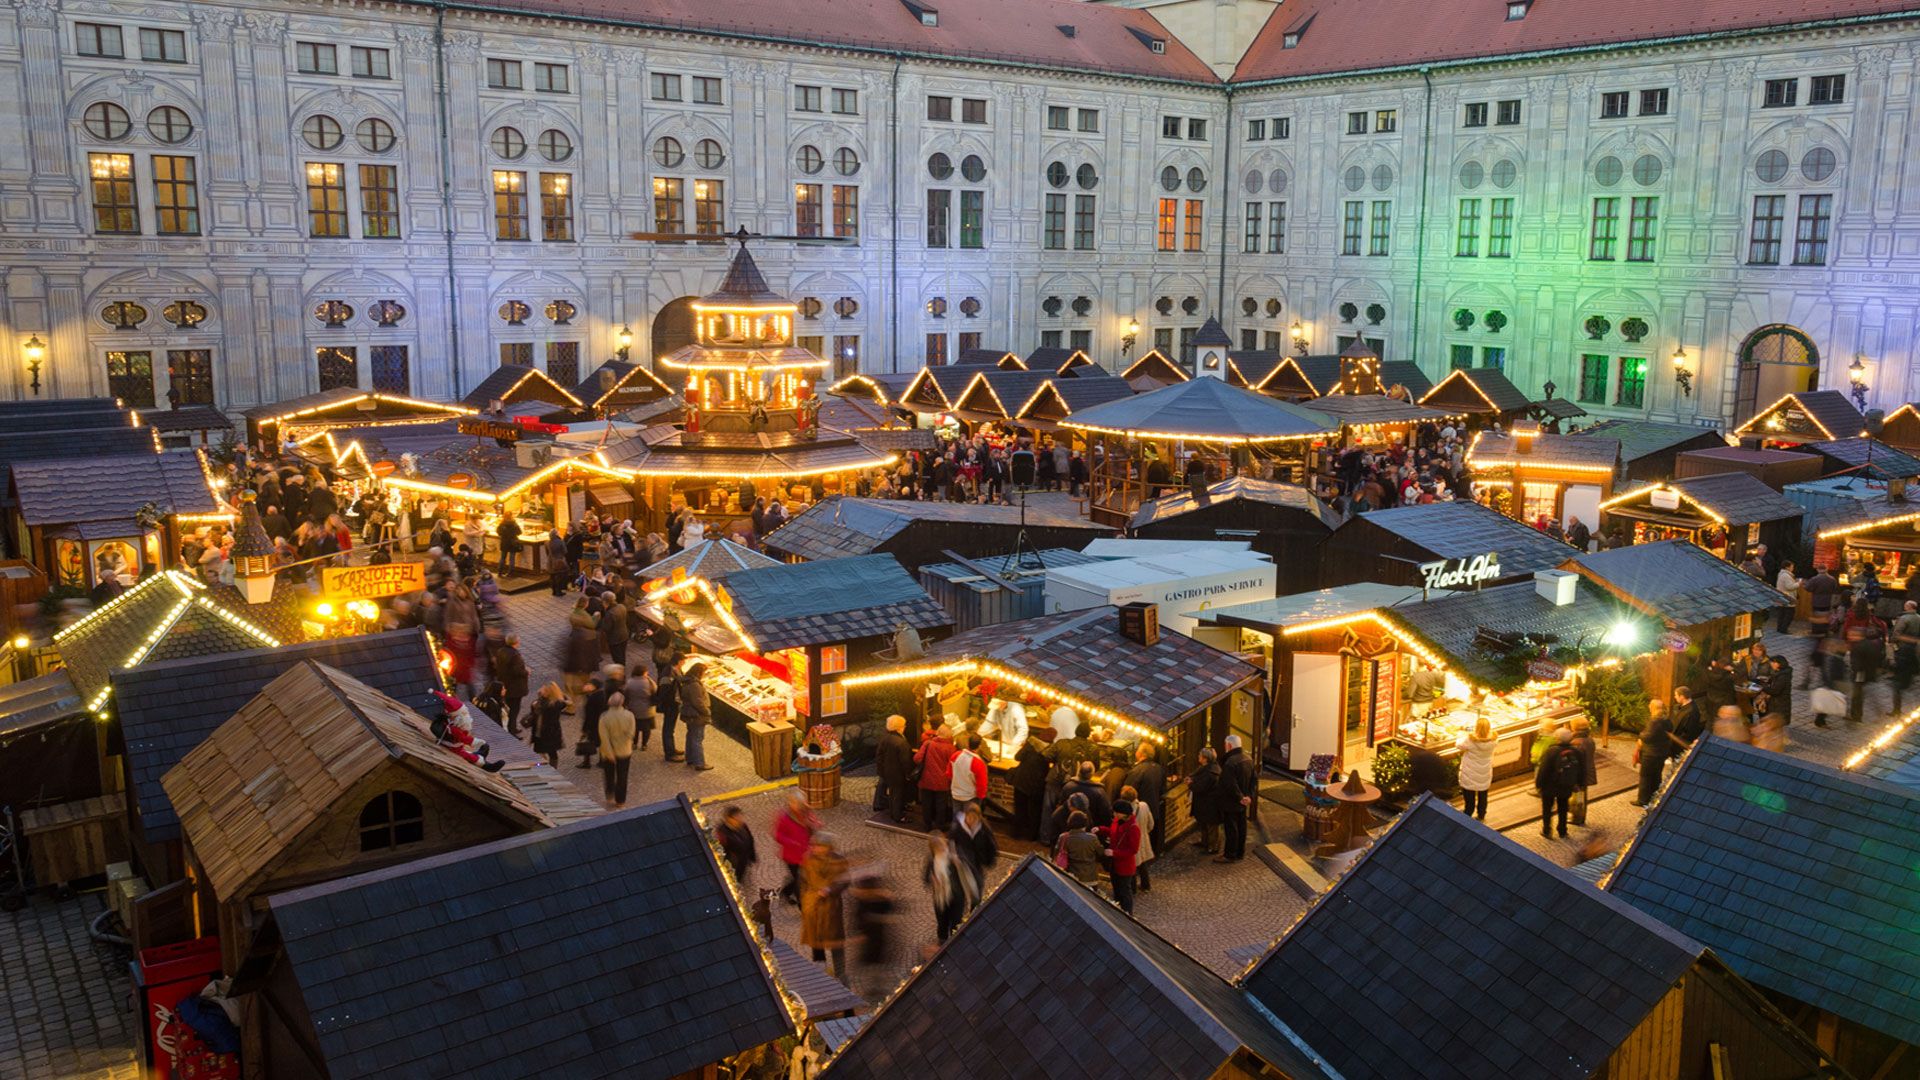 Munich Residenz Christmas Market